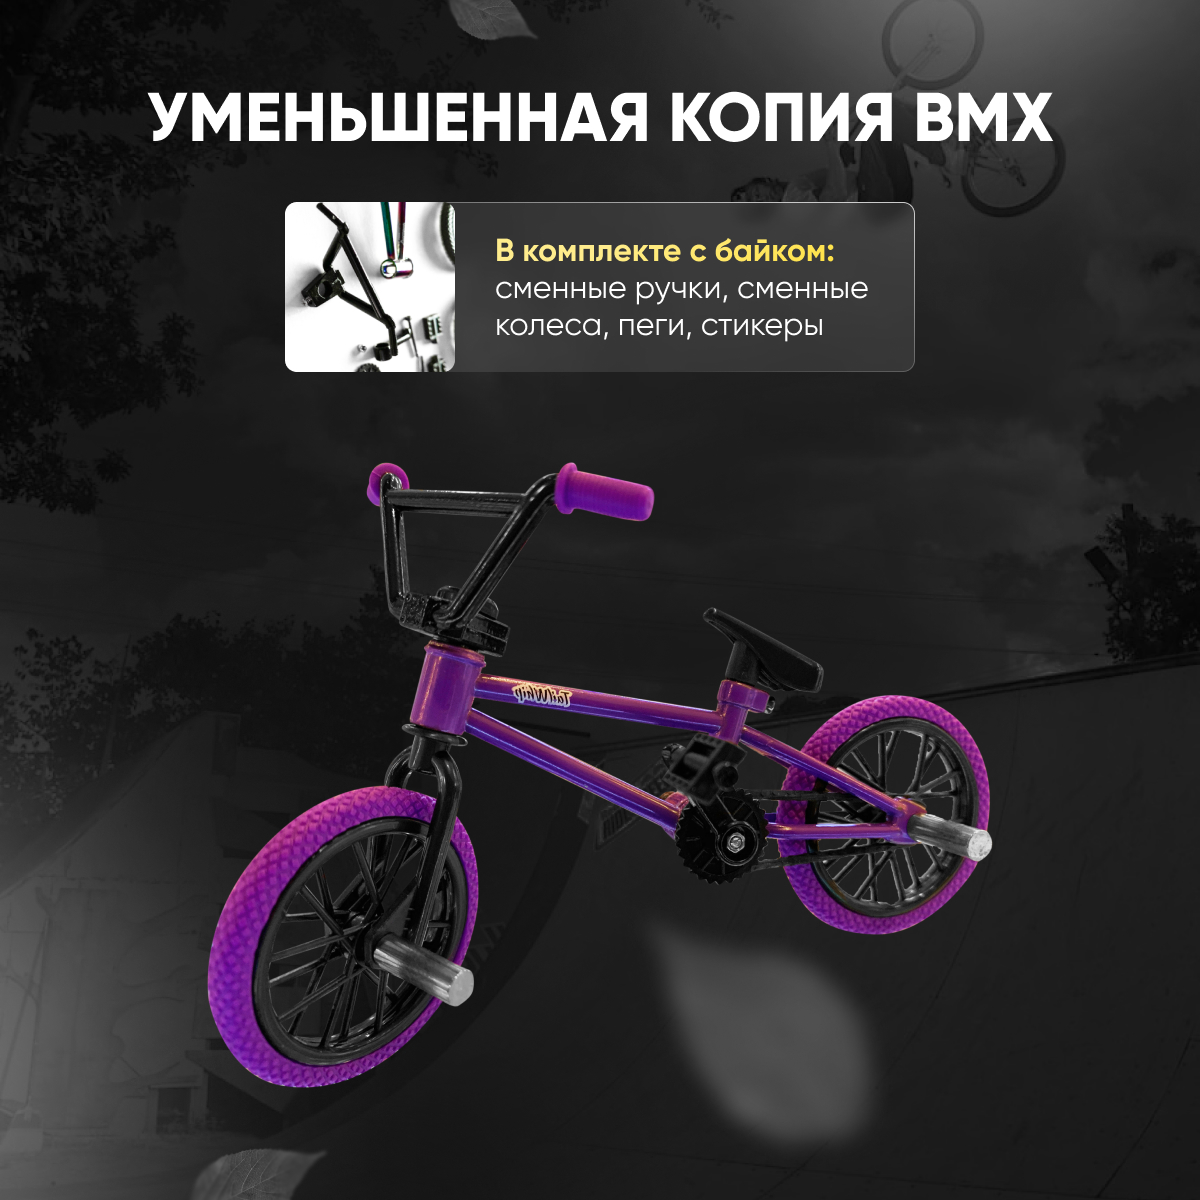 Игрушка Фингер BMX Tailwhip Violet